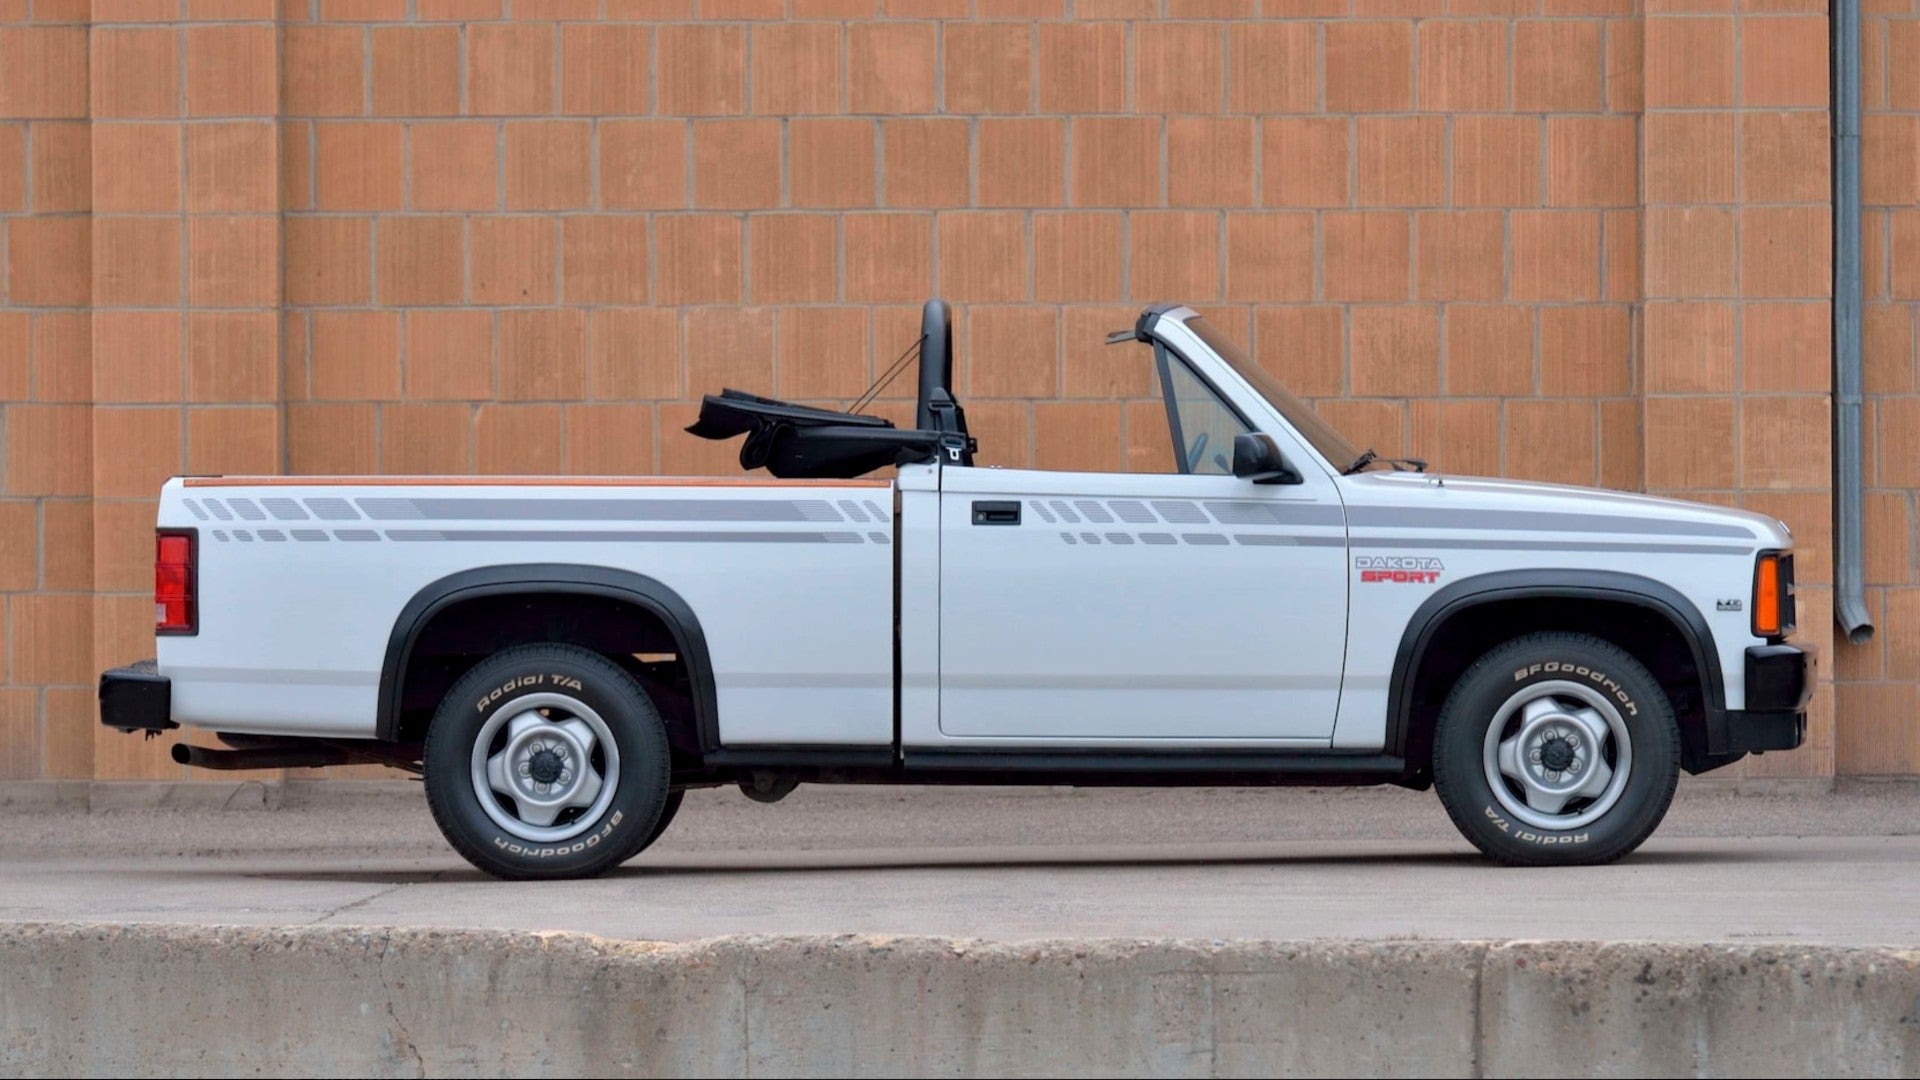 Peak Rad Cruiser: This 1990 Dodge Dakota Convertible Is Headed to Auction